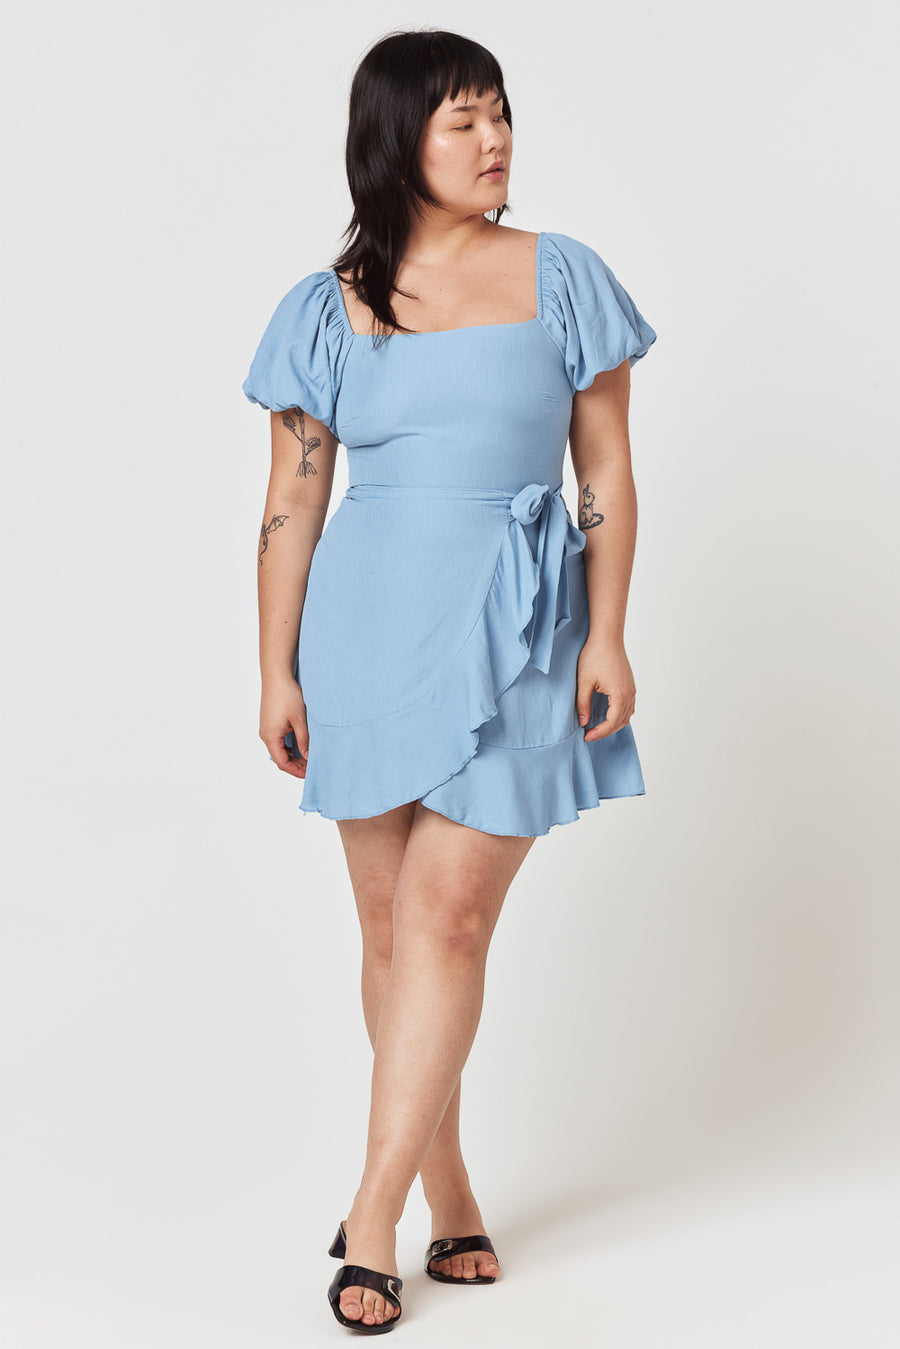 Slate Blue Puff Sleeve Wrap Dress - Trixxi Clothing